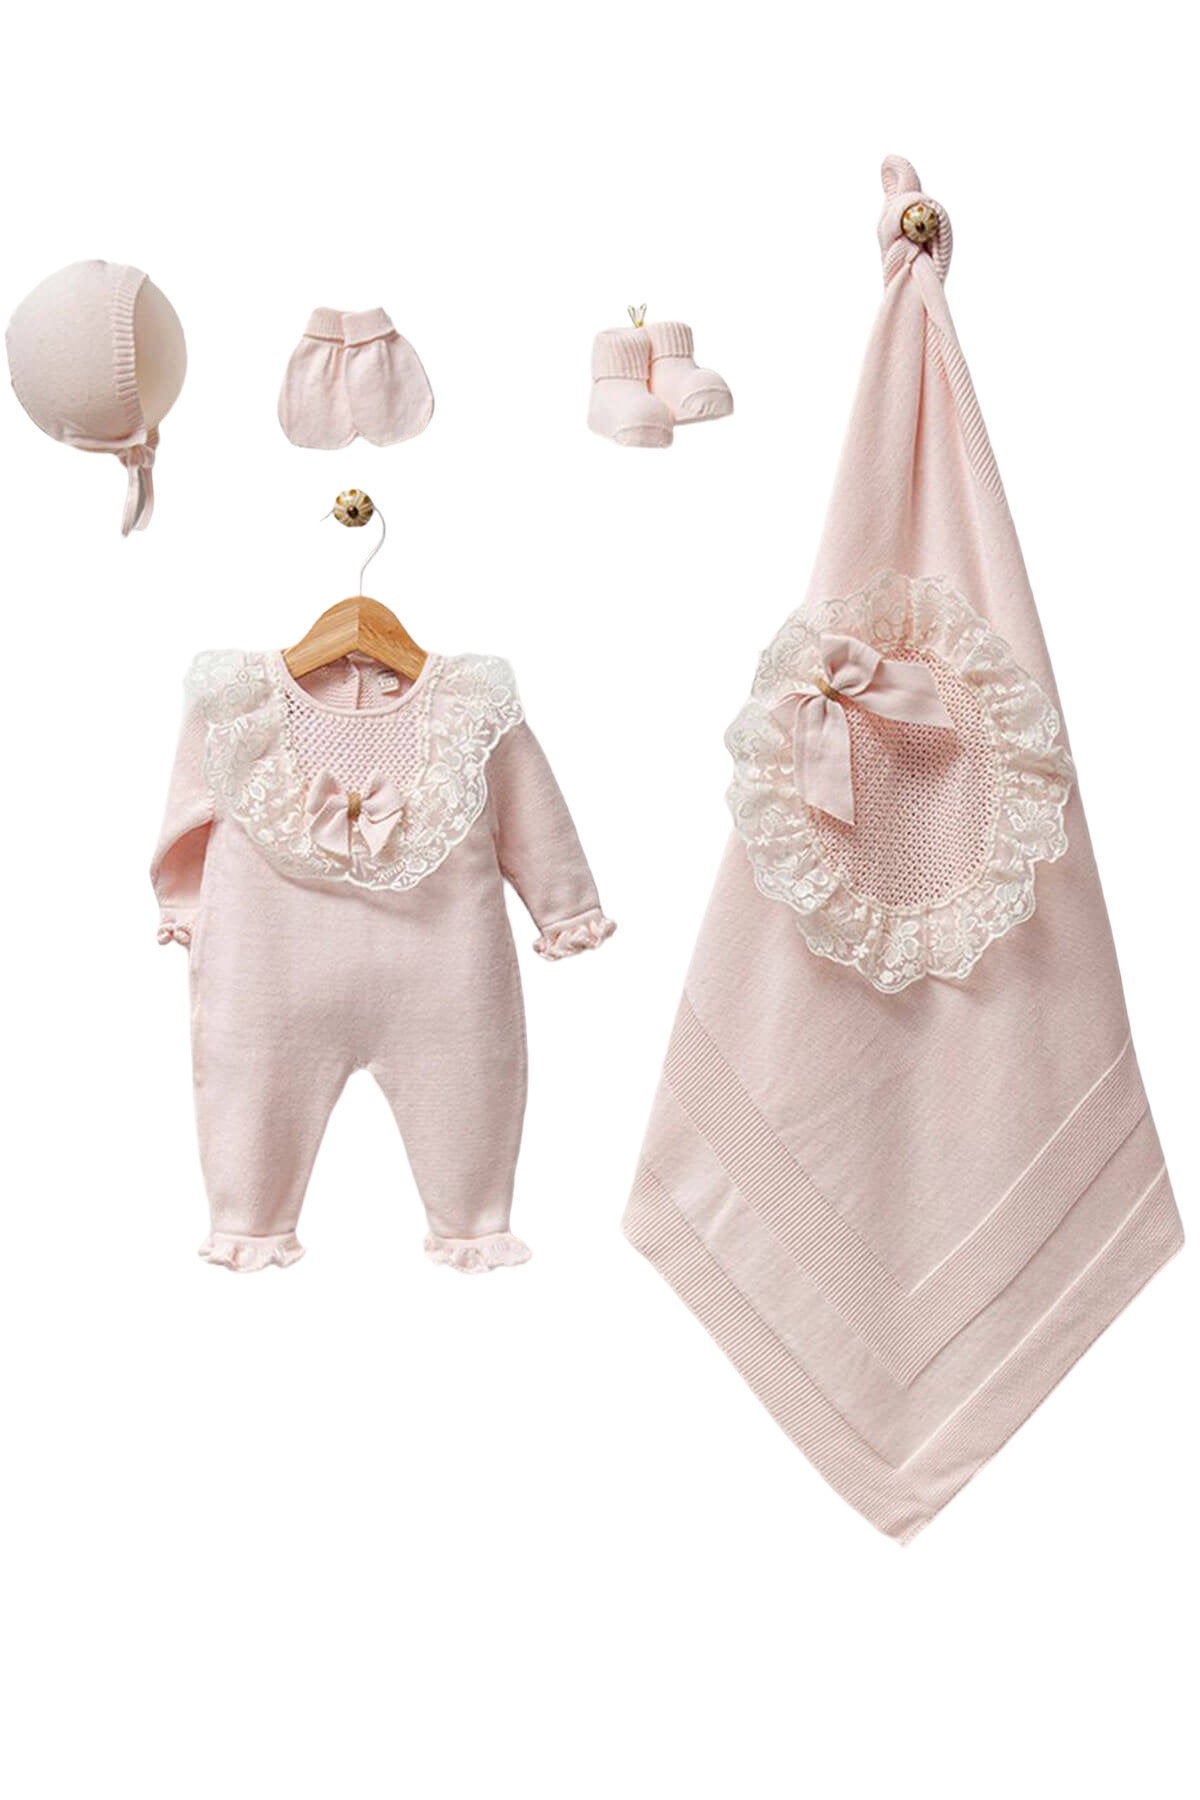 Nora Pink Newborn Knitwear Coming Home Set (5 Pcs)